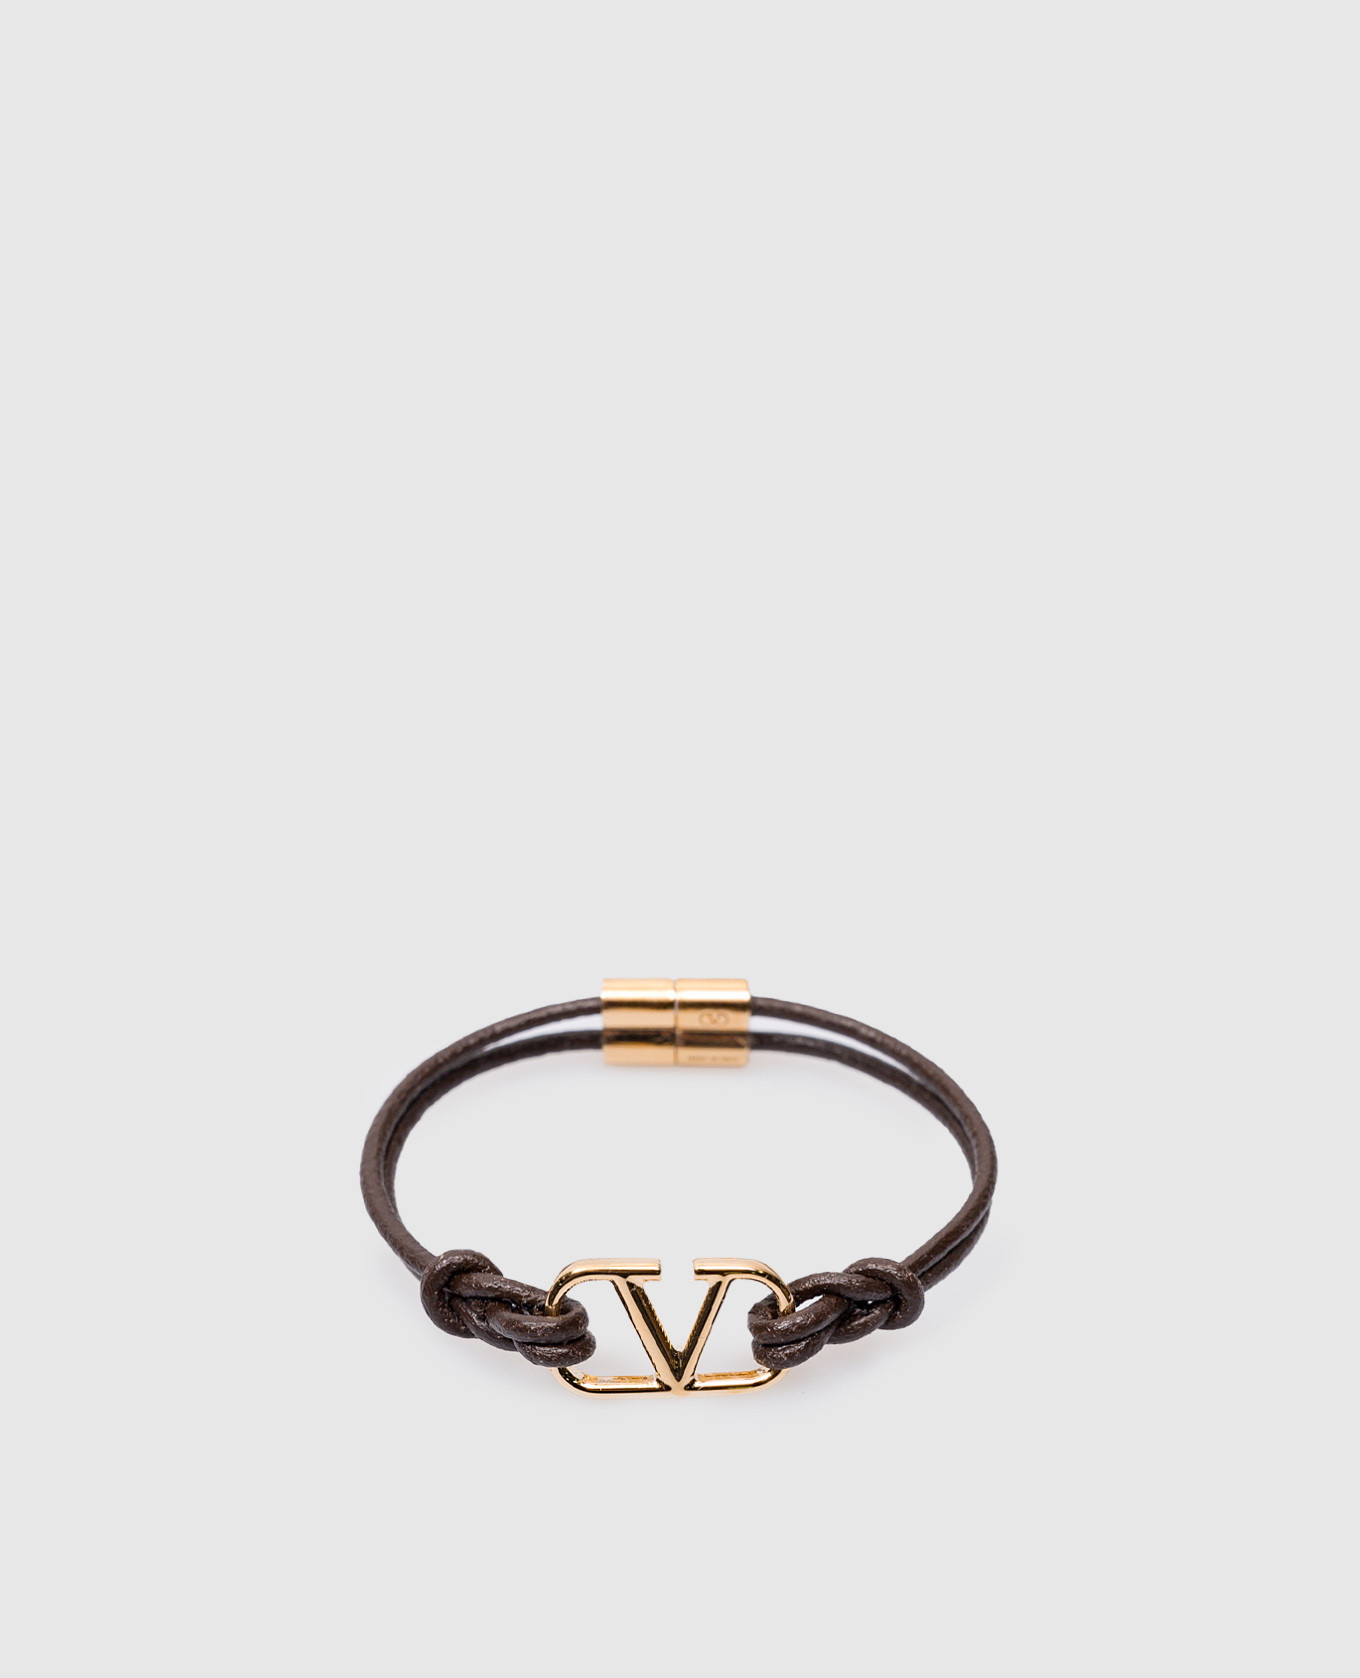 VLogo Signature Brown Leather Bracelet